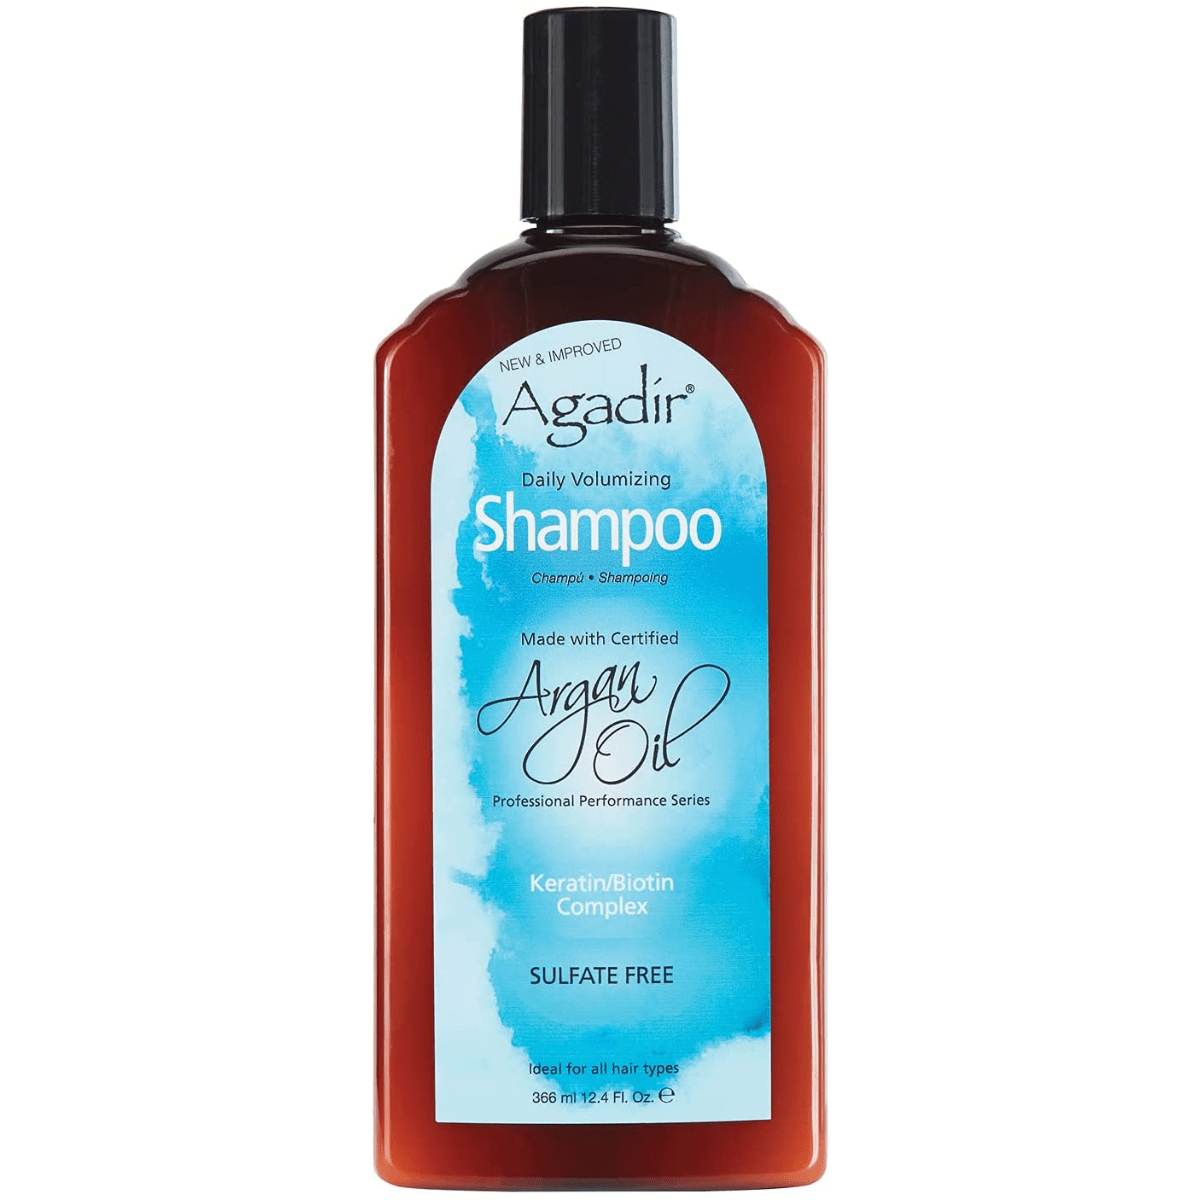 Agadir Argan Oil Daily Volumizing Shampoo 12.4oz